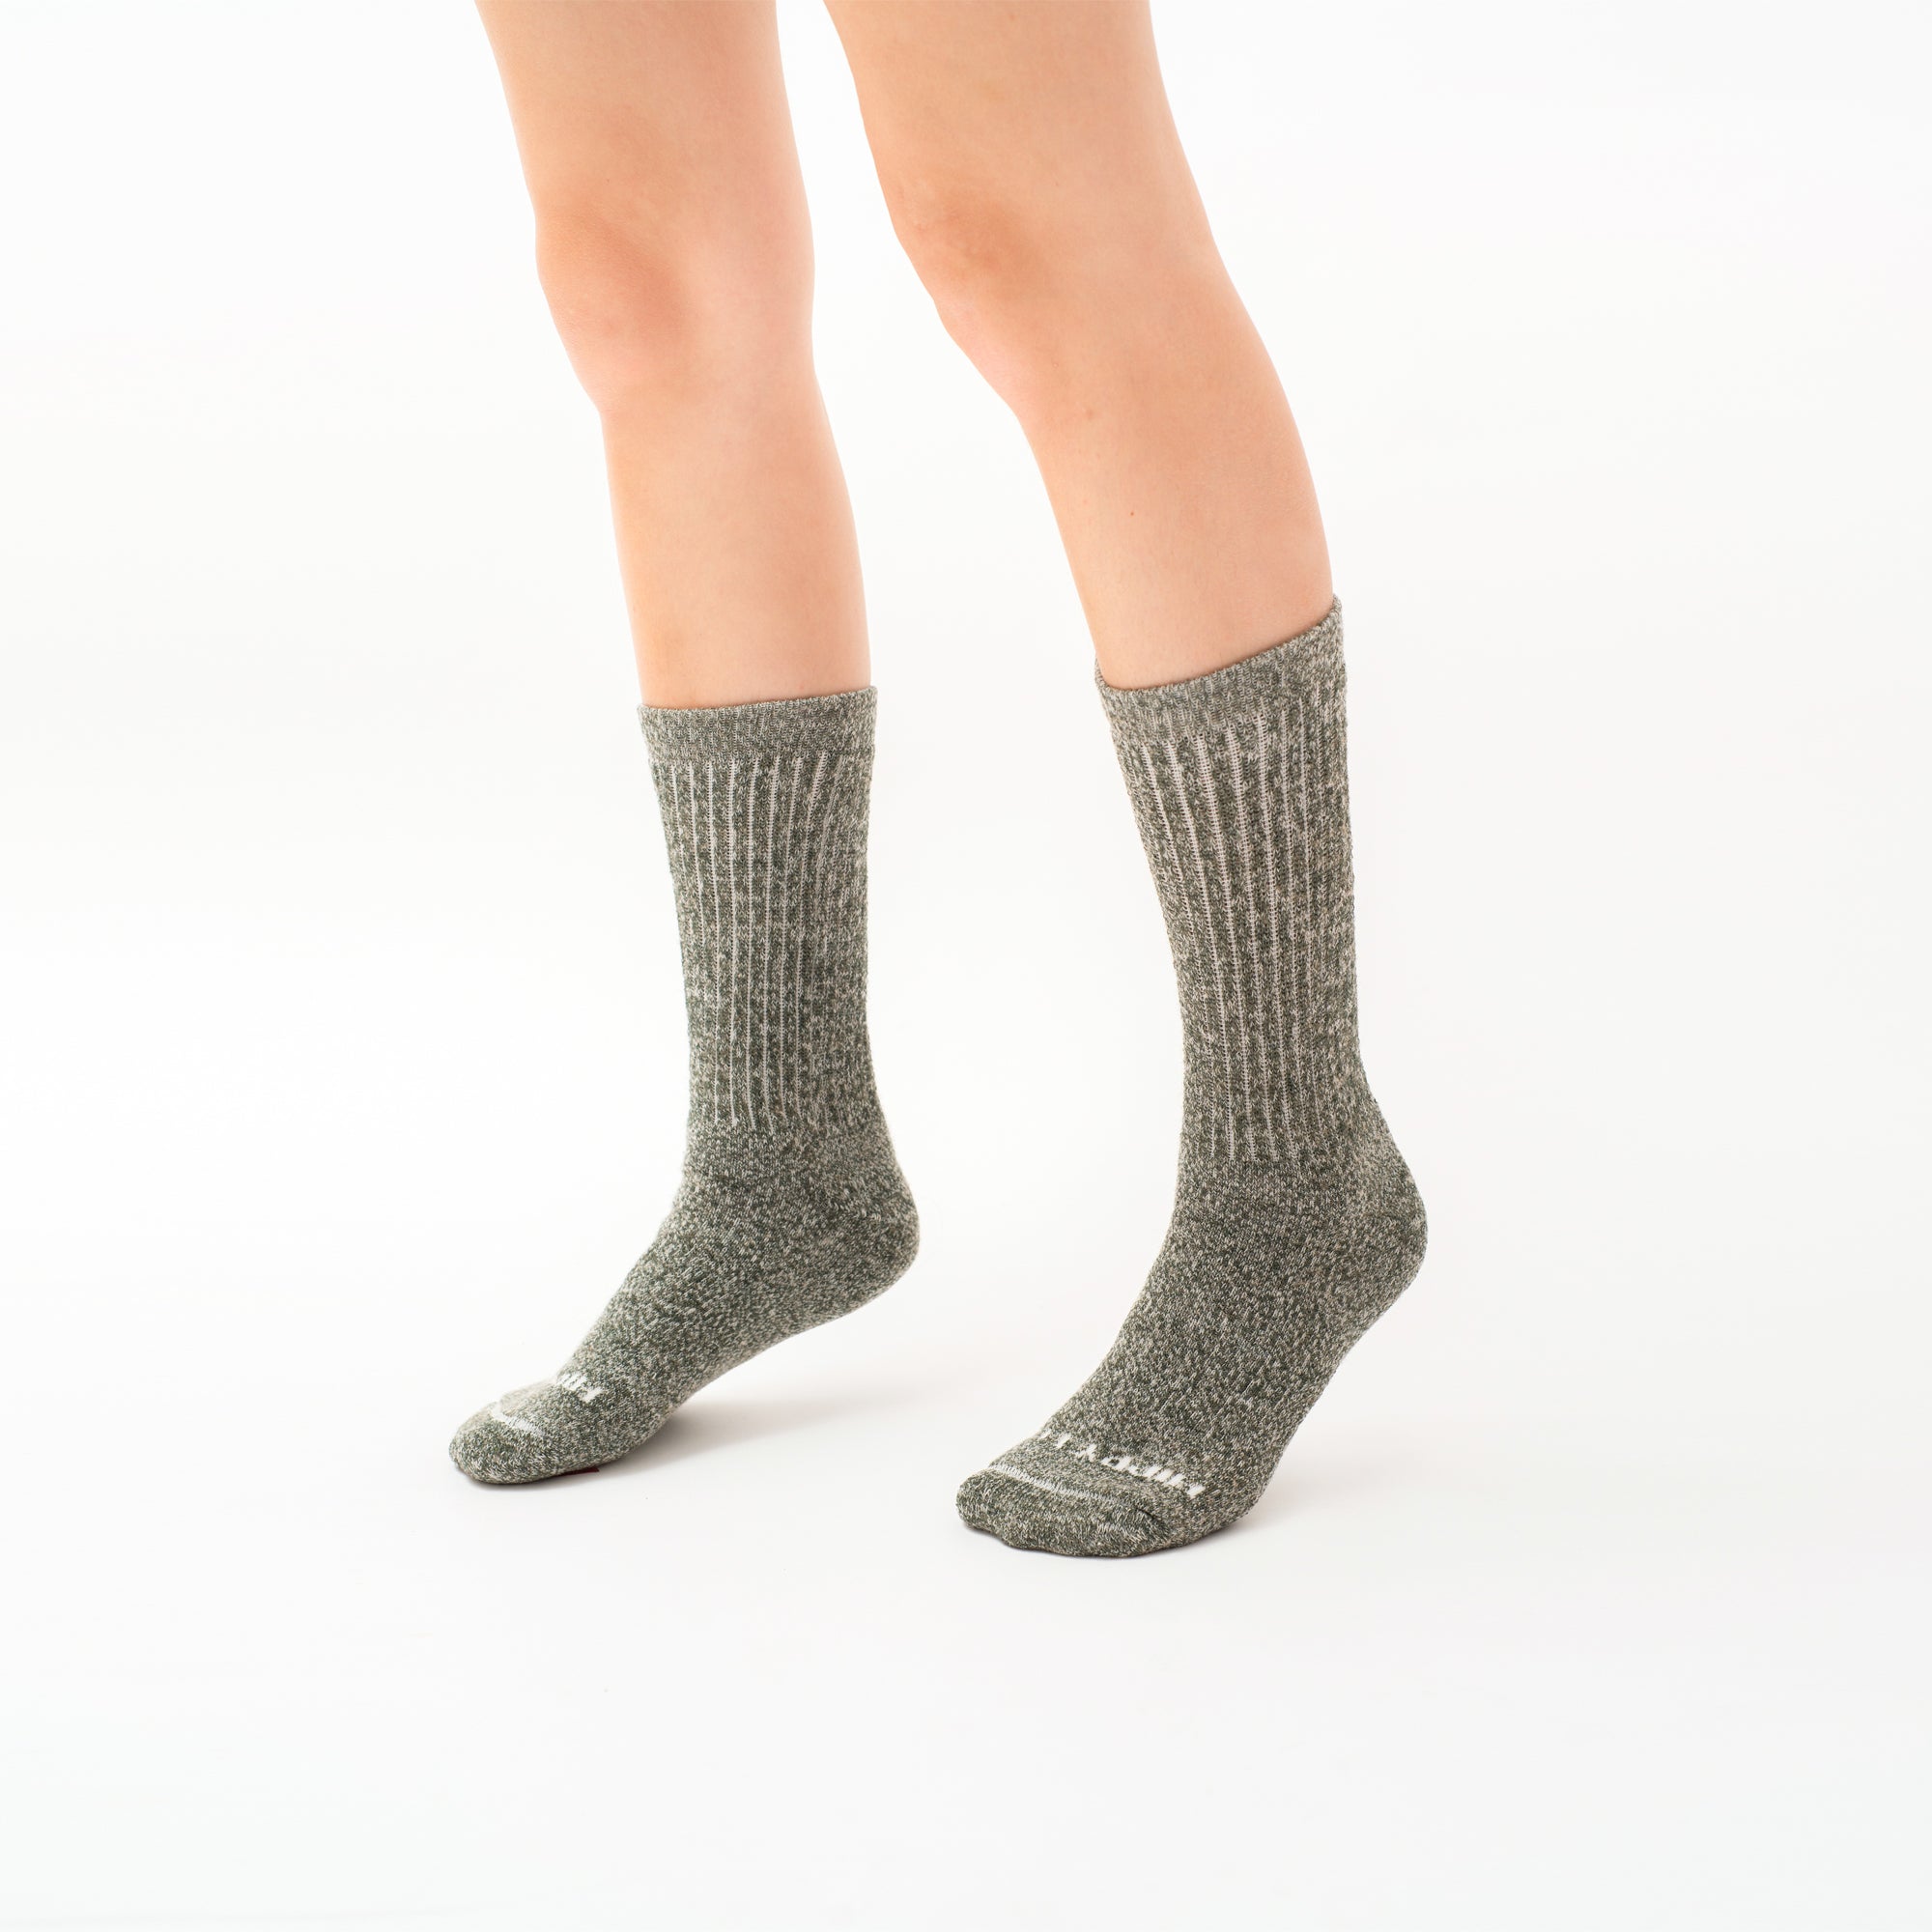 Green merino wool hiking socks